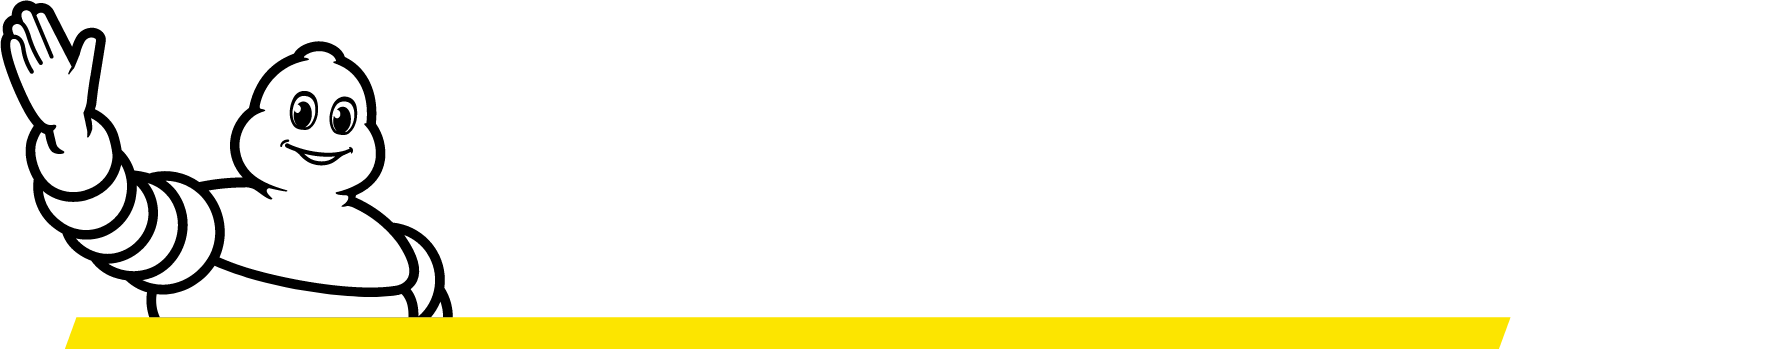 Michelin logo large for dark backgrounds (transparent PNG)